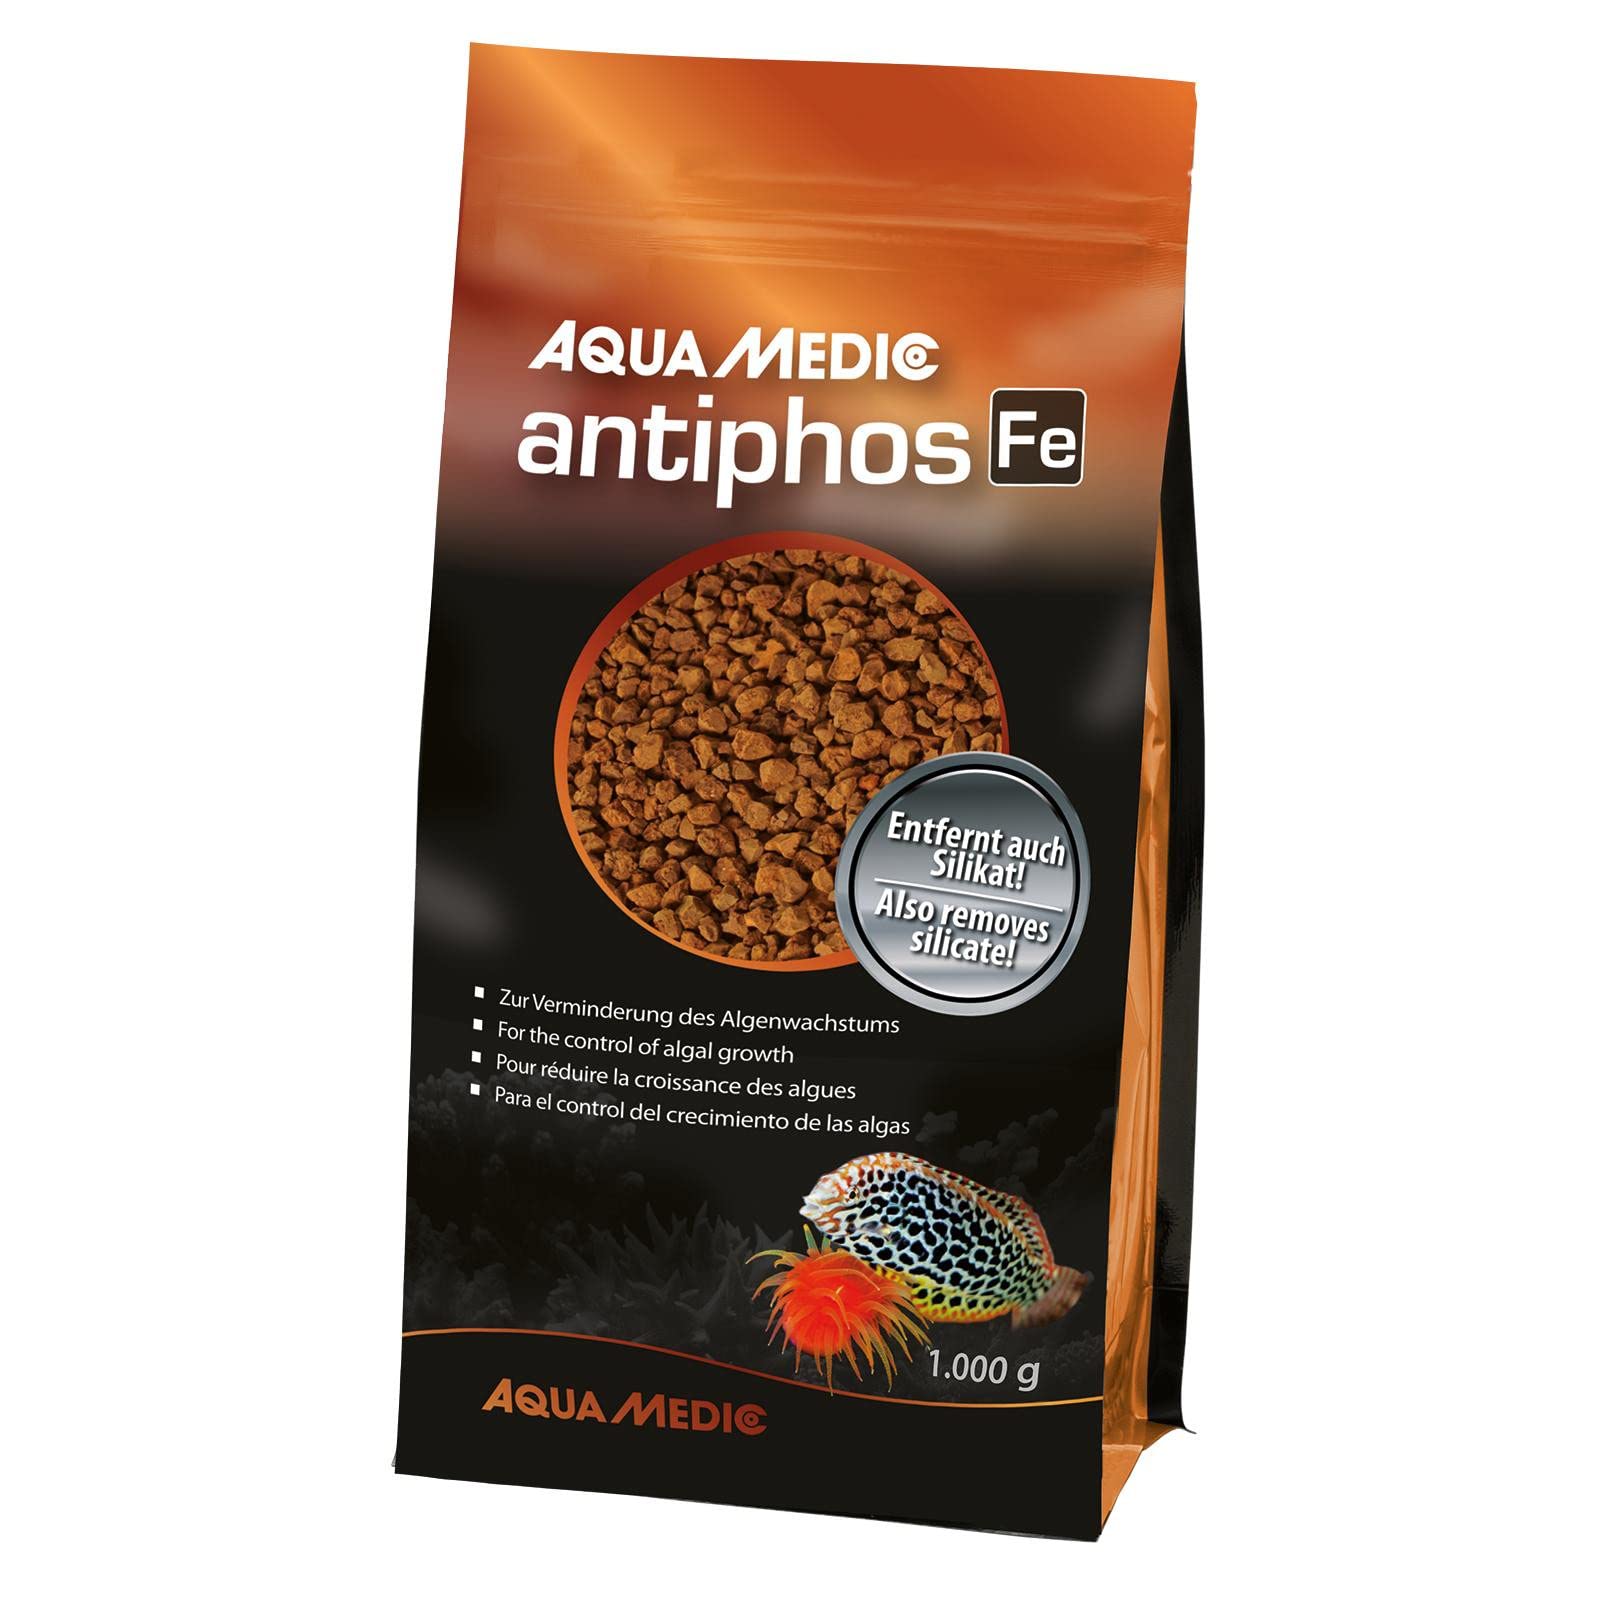 Aqua Medic antiphos FE 1000g / ca. 1600ml